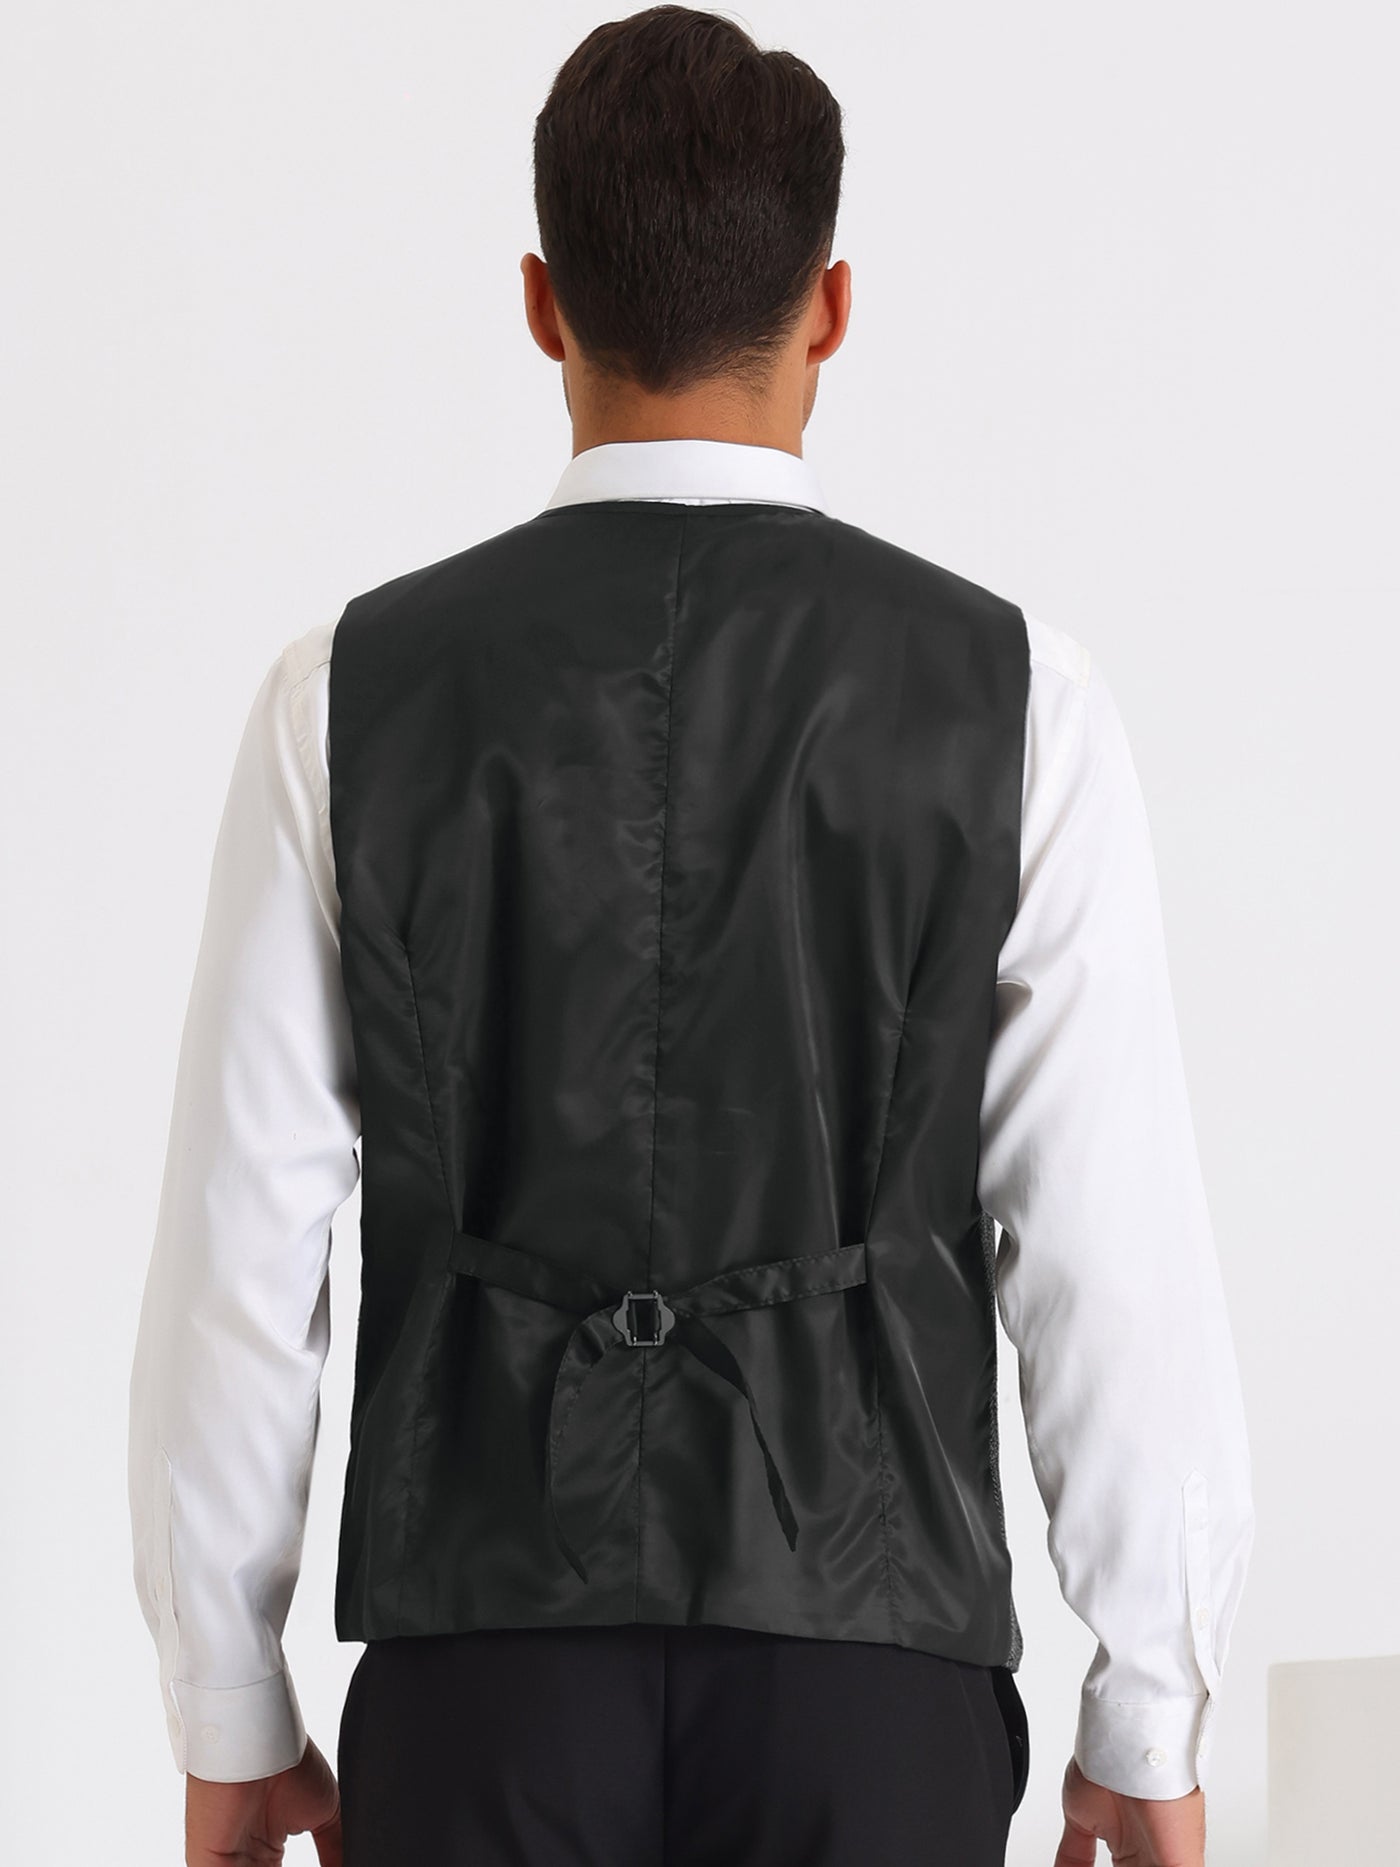 Bublédon Herringbone Suits Vest for Men's Classic Slim Fit Business Formal Dress Waistcoat